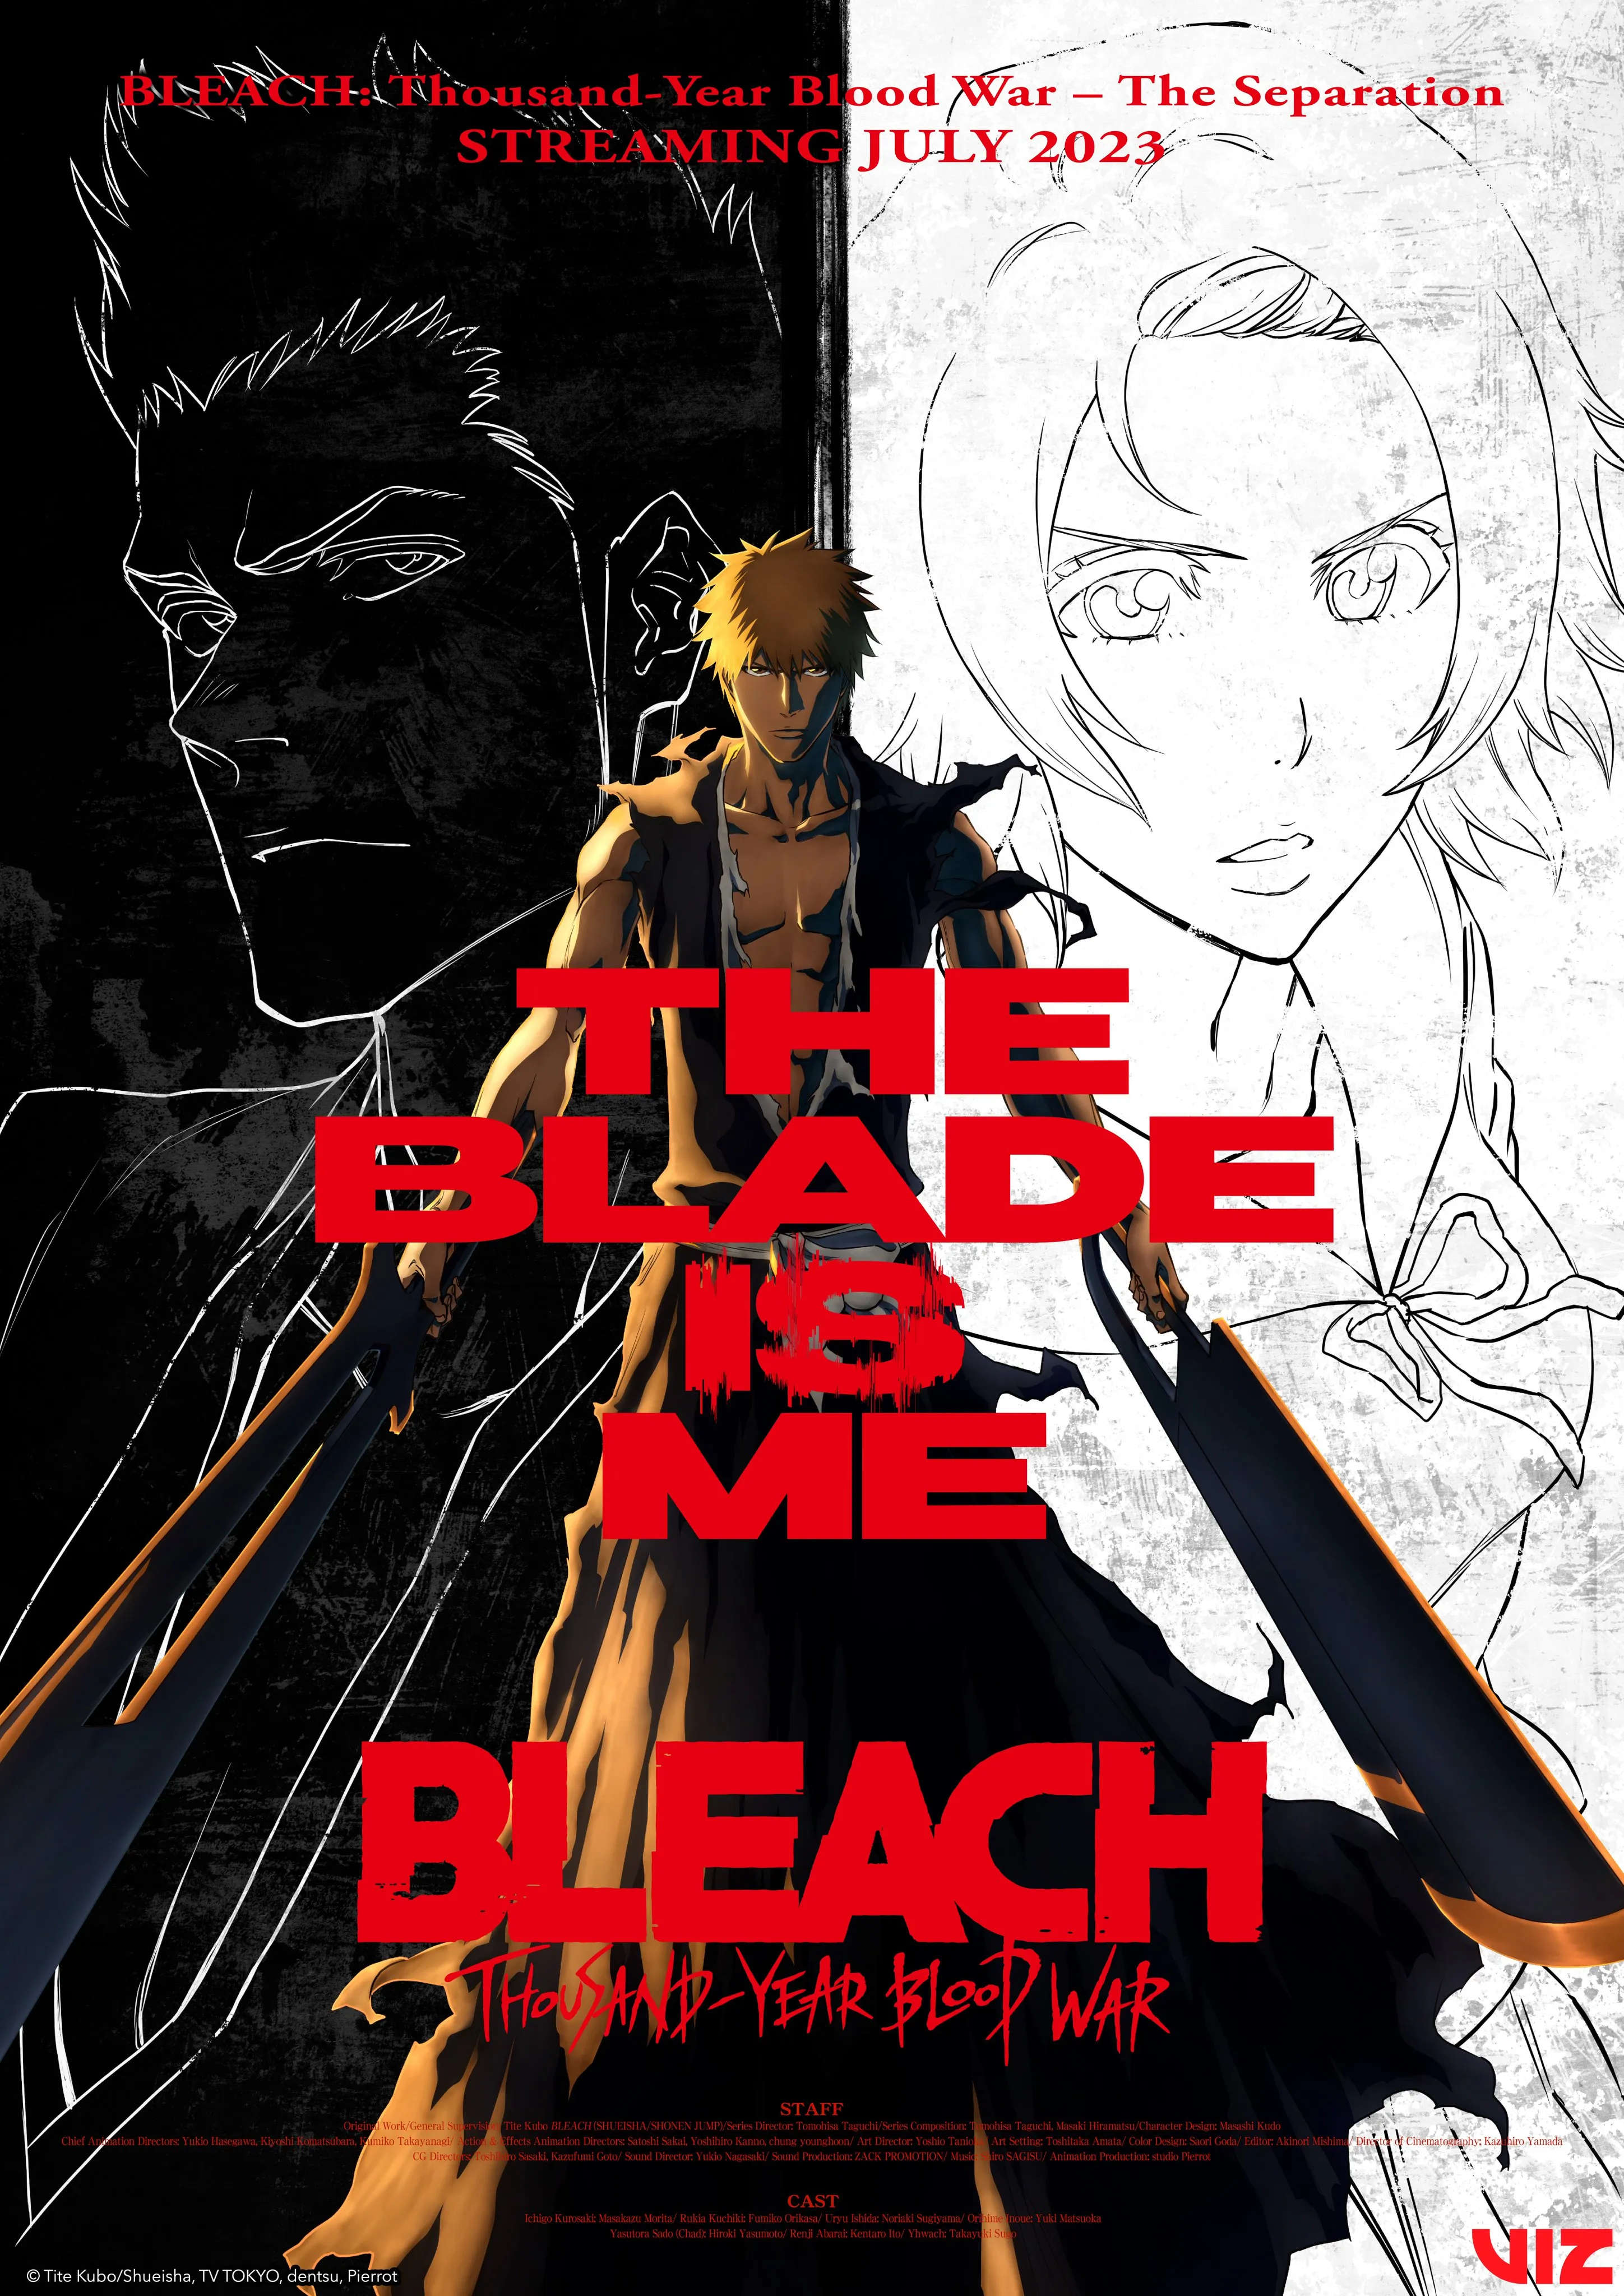 BLEACH ThousandYear Blood War Animes Streaming License Acquired by  Disney  Manga Thrill